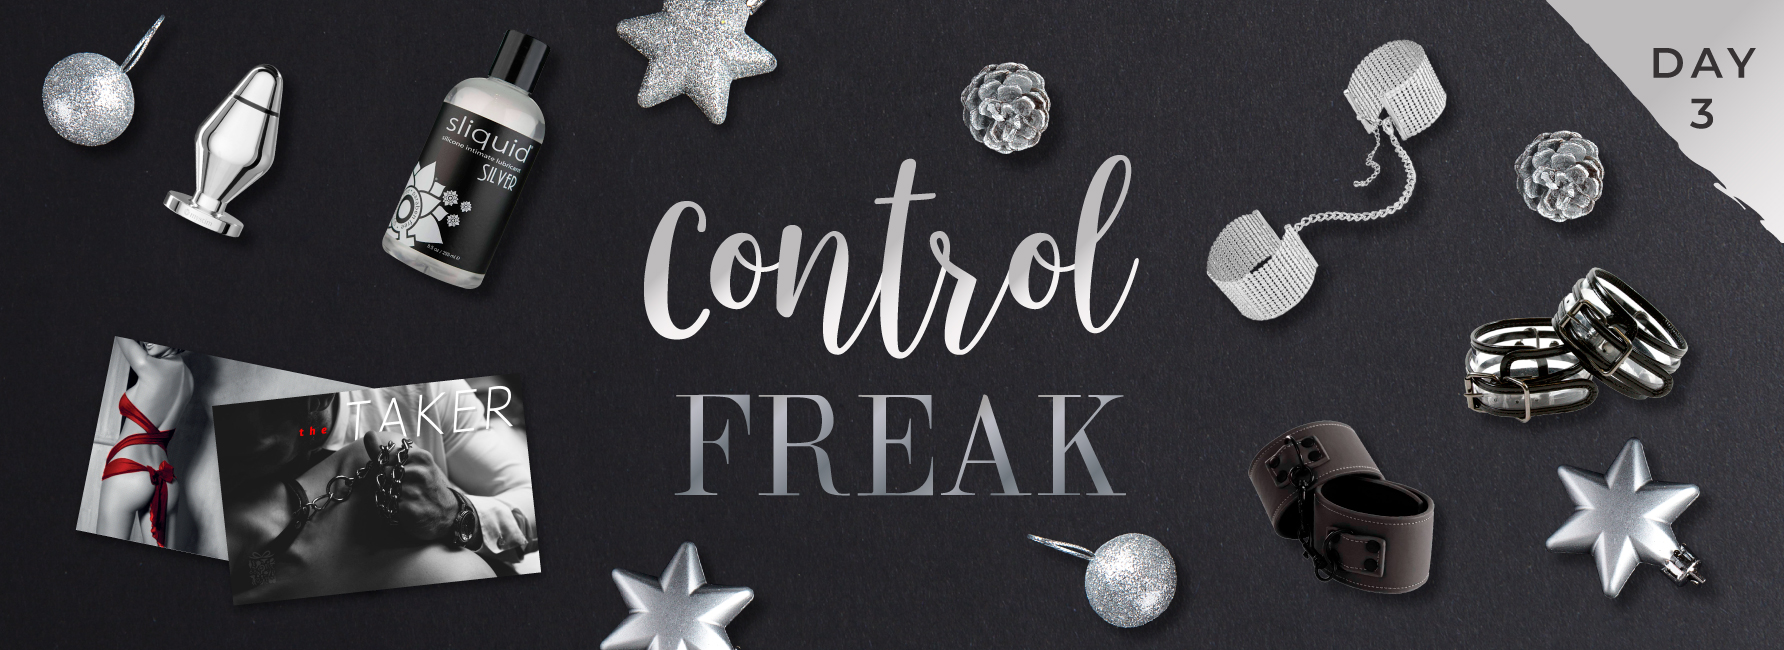 Day 3- Control Freak